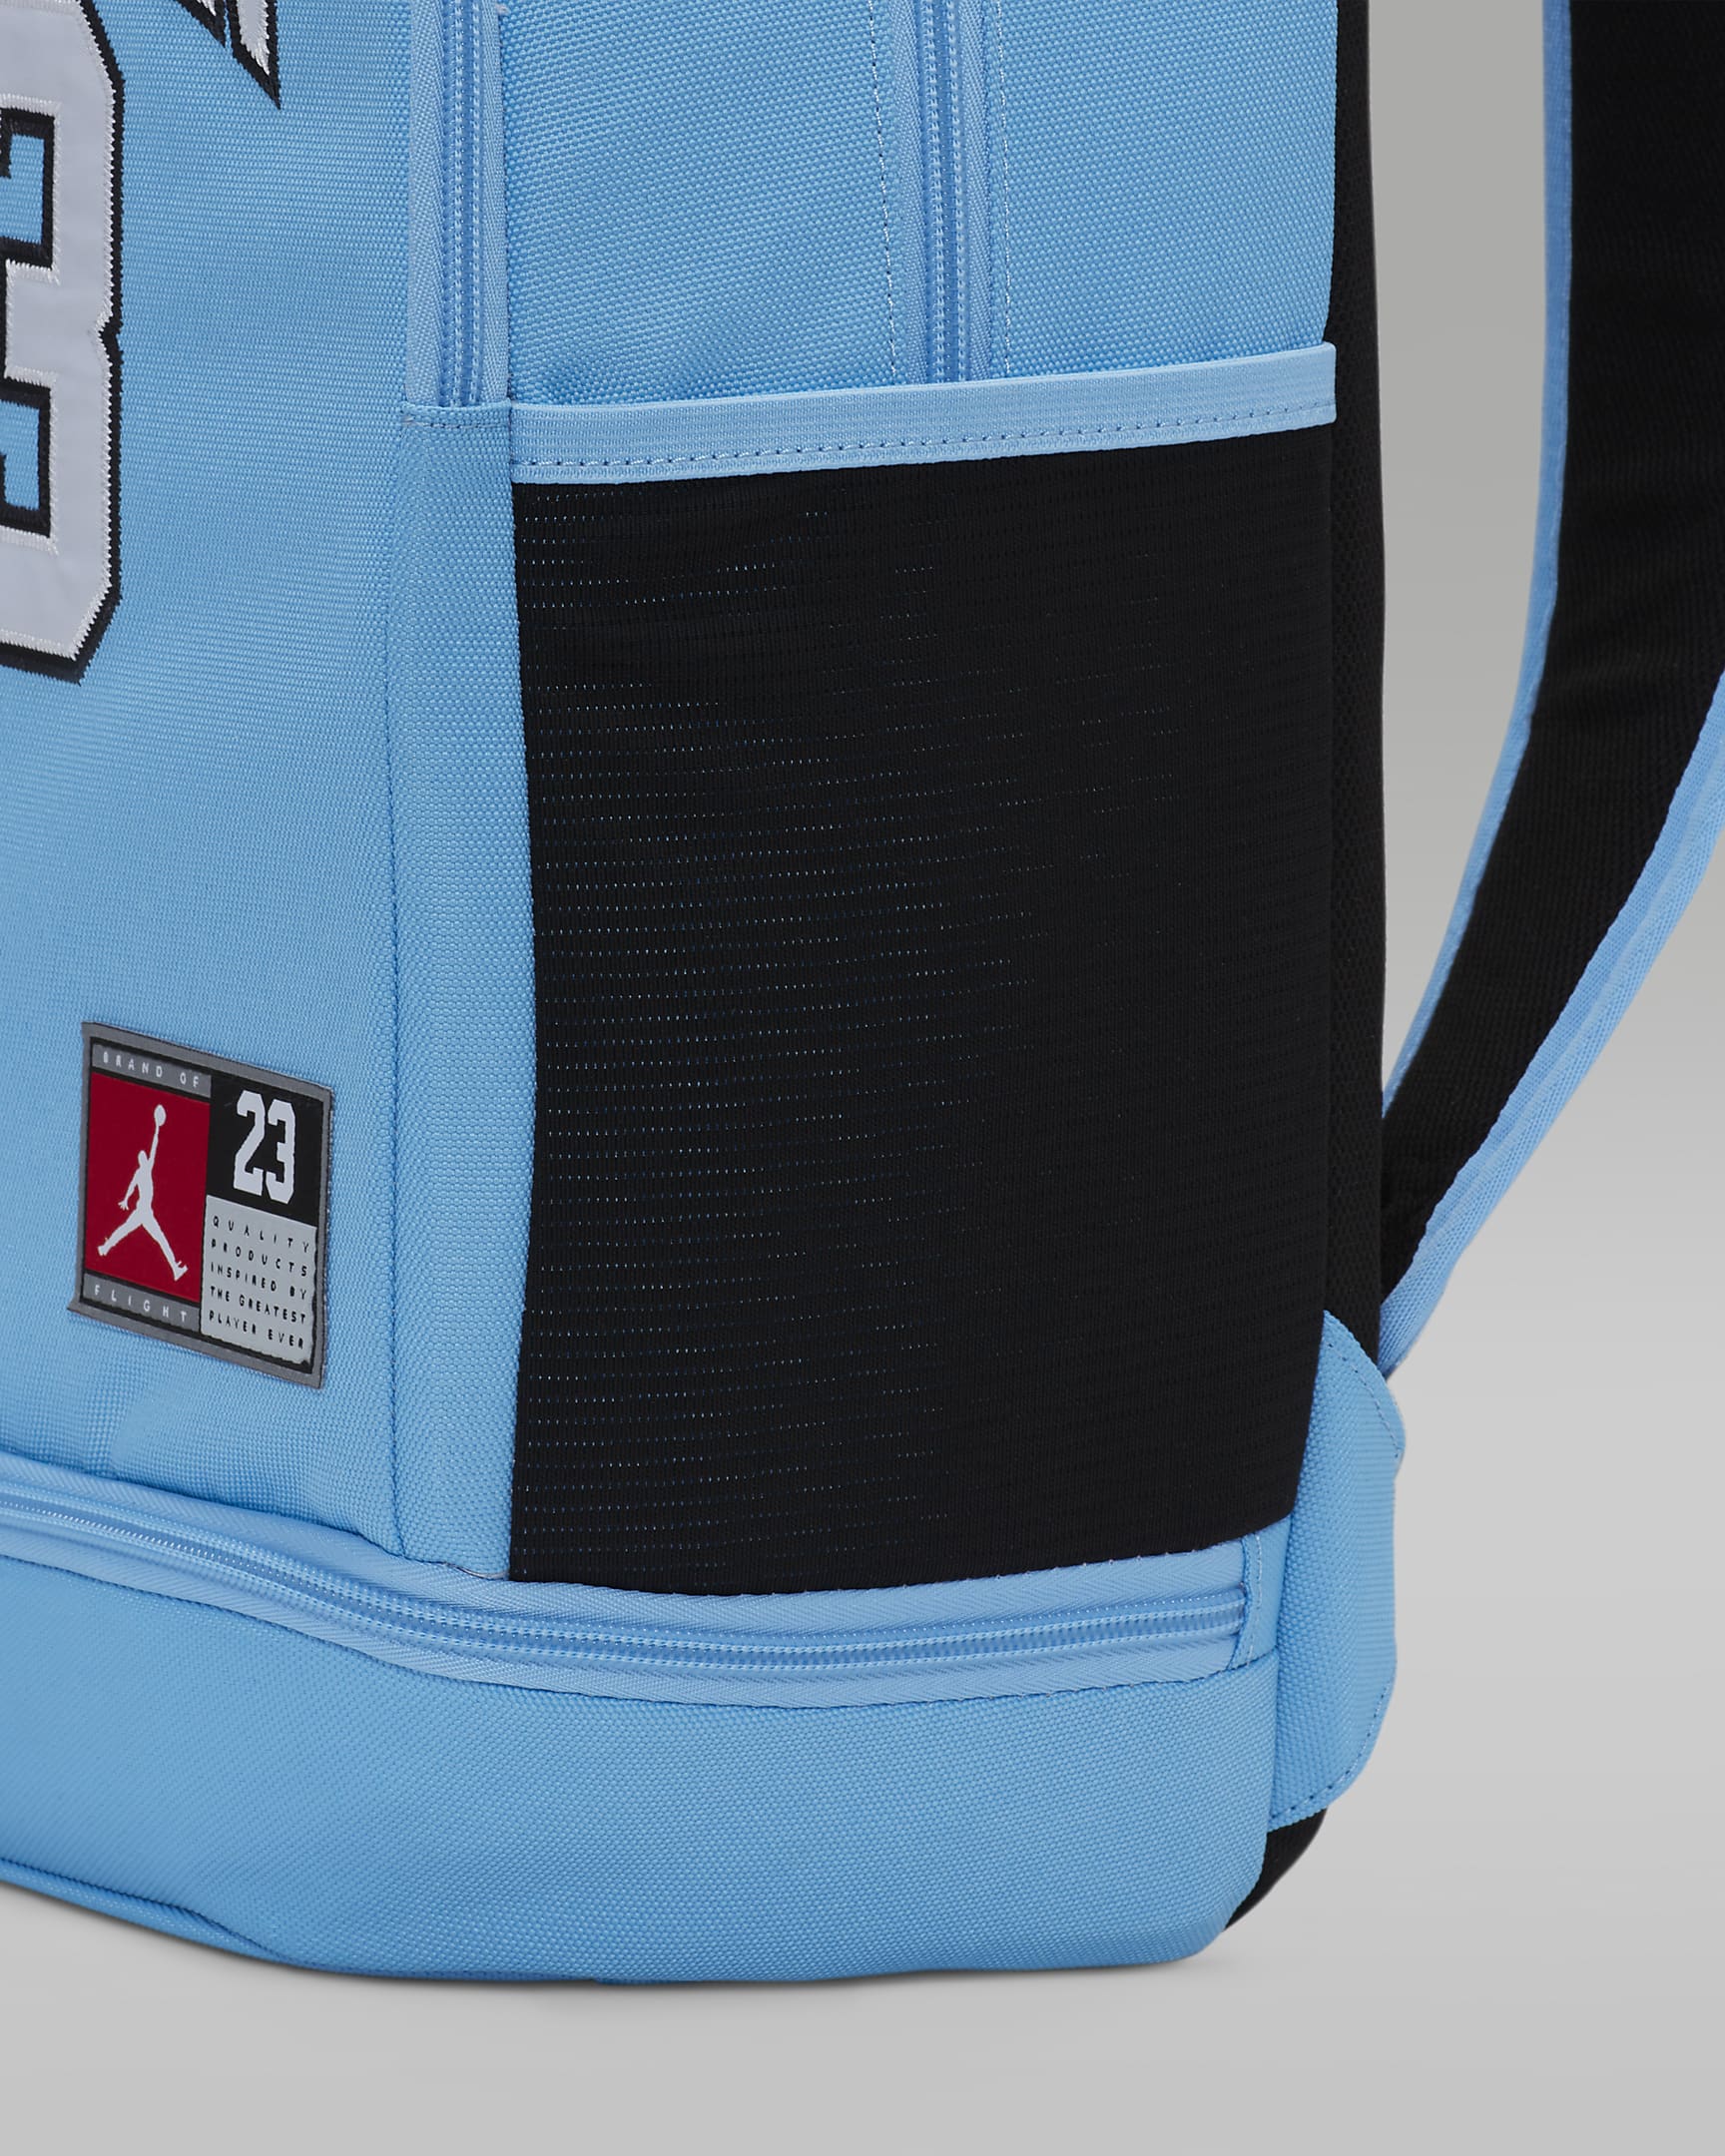 Jordan Jersey 23 Backpack